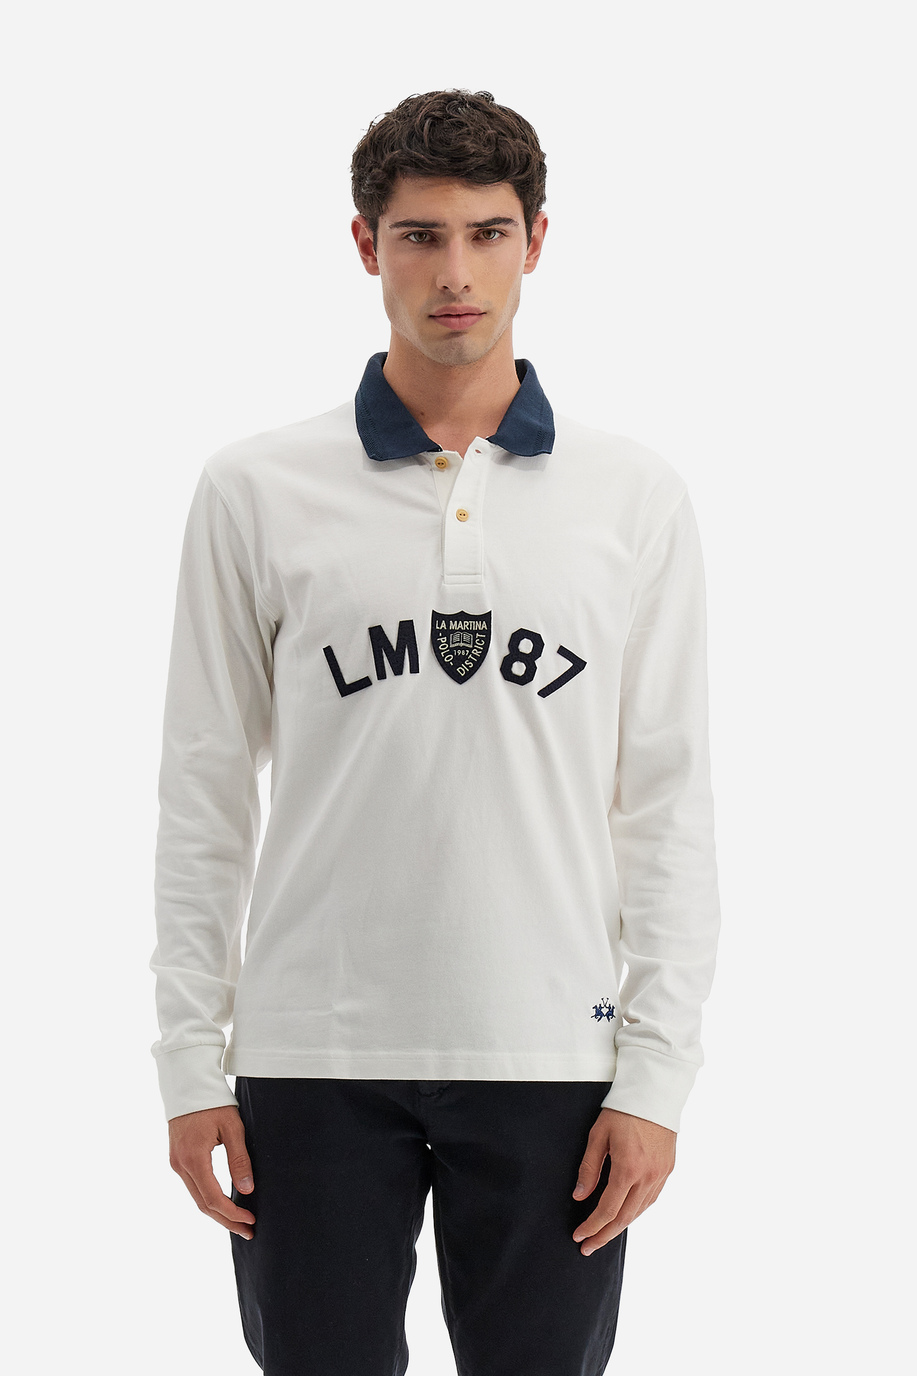 Polo Academy Herren-Langarm-Poloshirt mit kleinem Kontrastkragen-Logo - Vardis - Langarm | La Martina - Official Online Shop